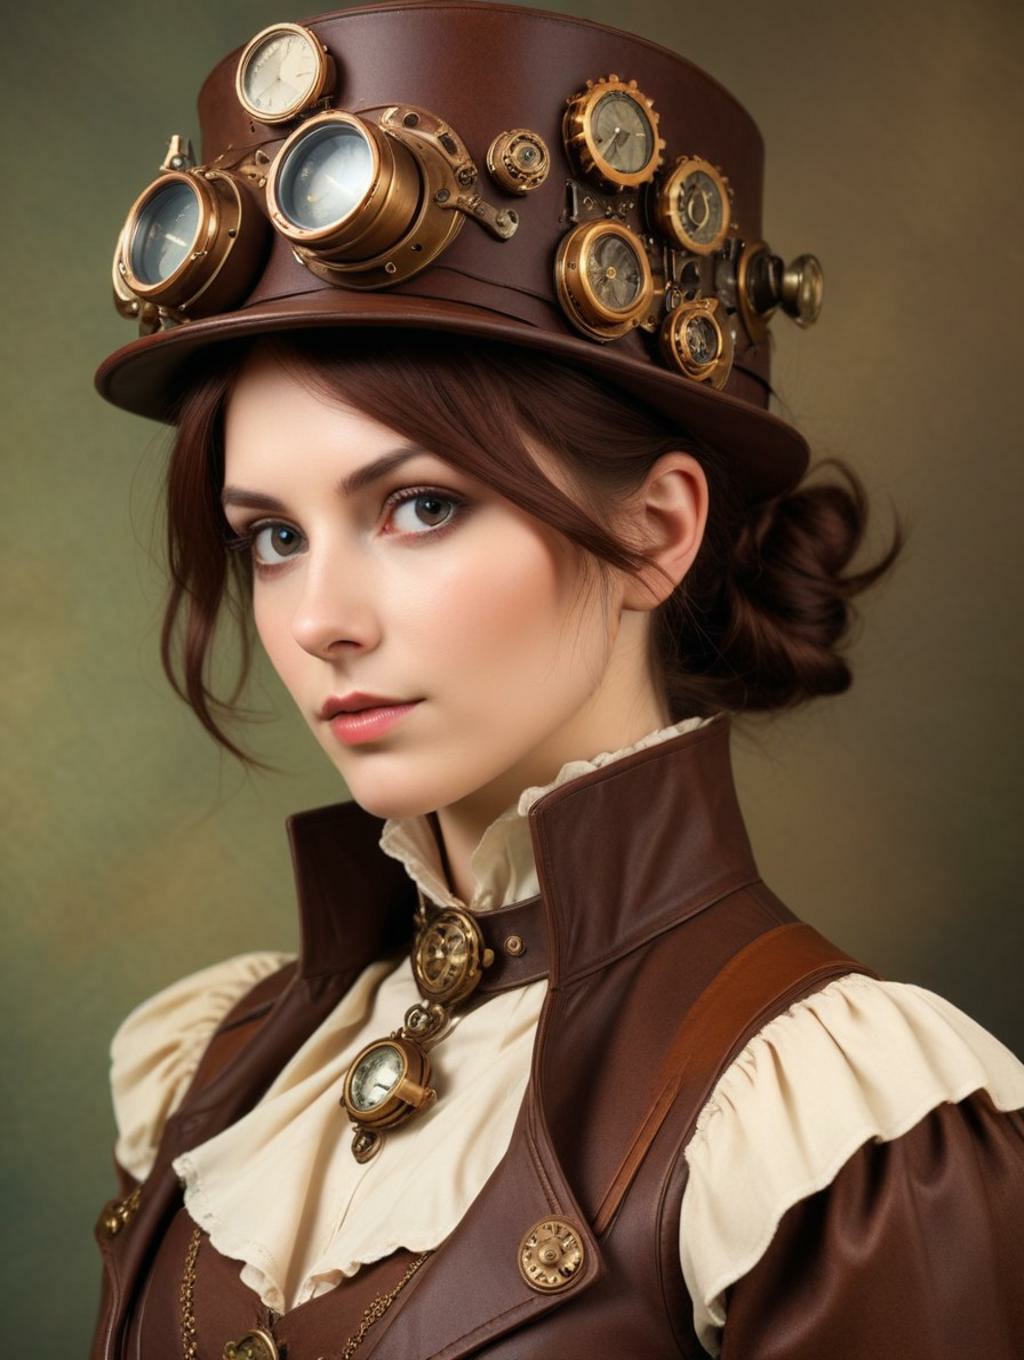 Steampunk Gadget Inventor Women: Image Frames & Art Portraits-Theme:4